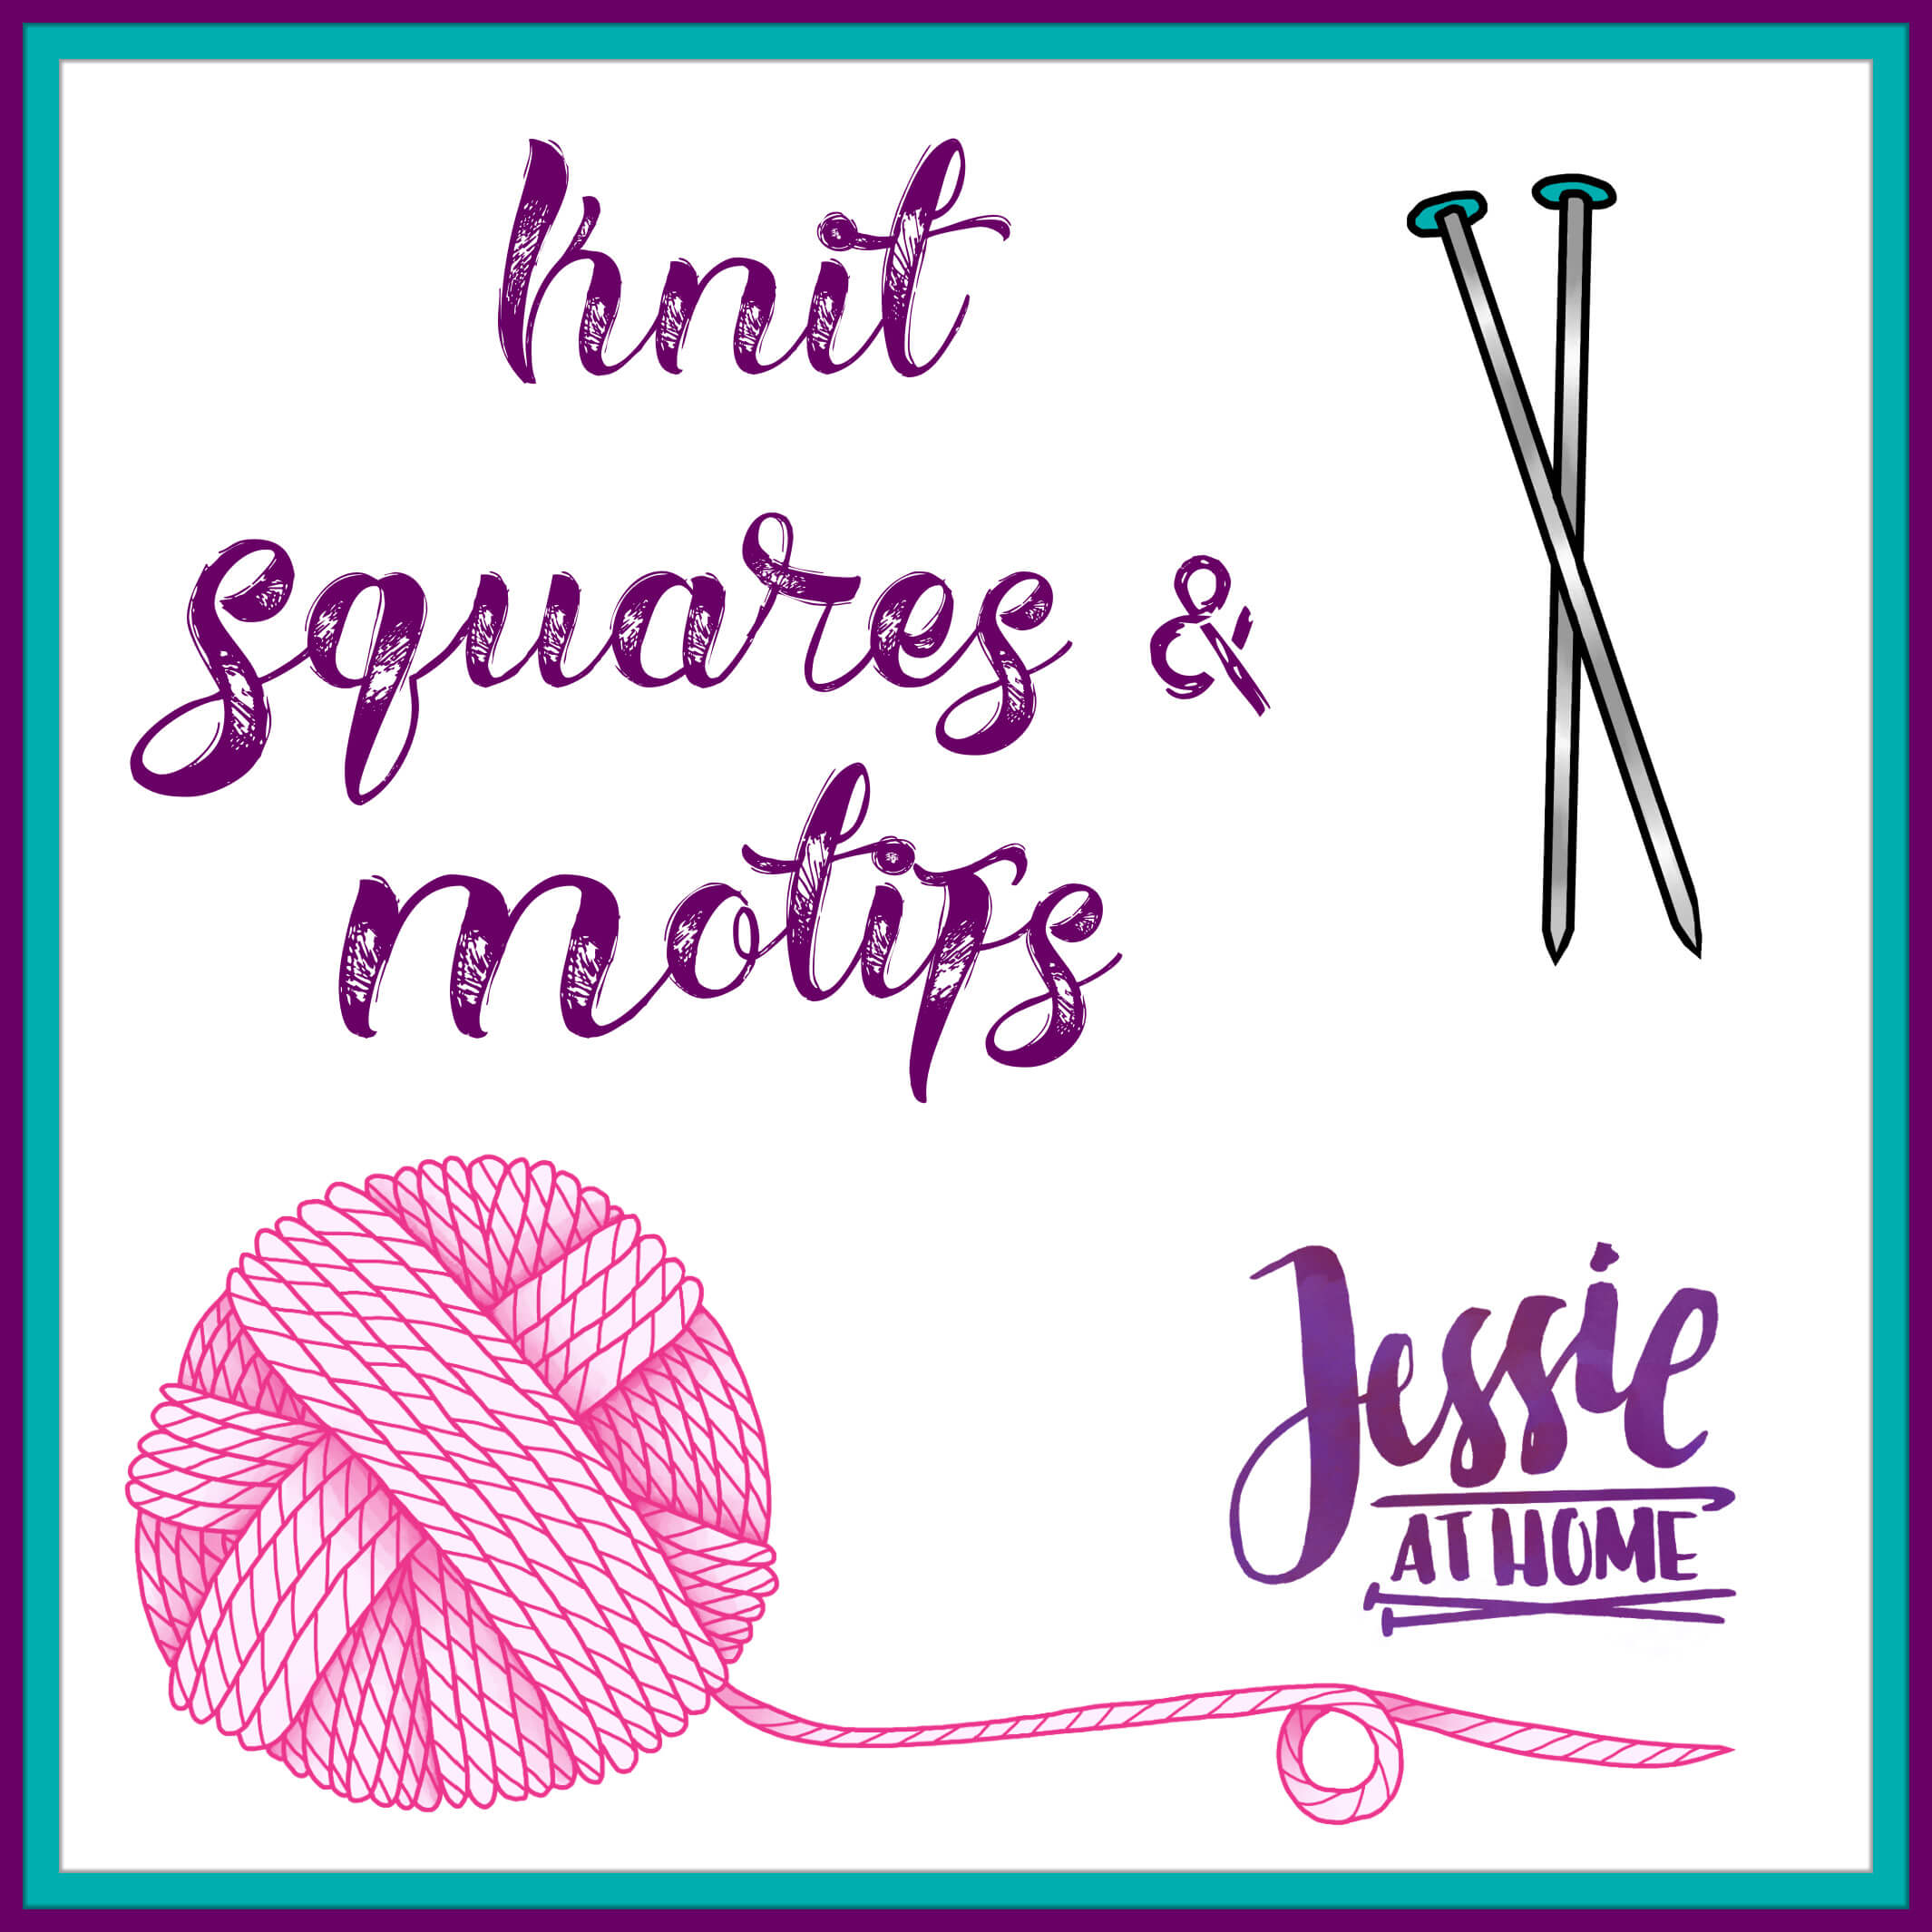 Knit Squares & Motifs Menu on Jessie At Home